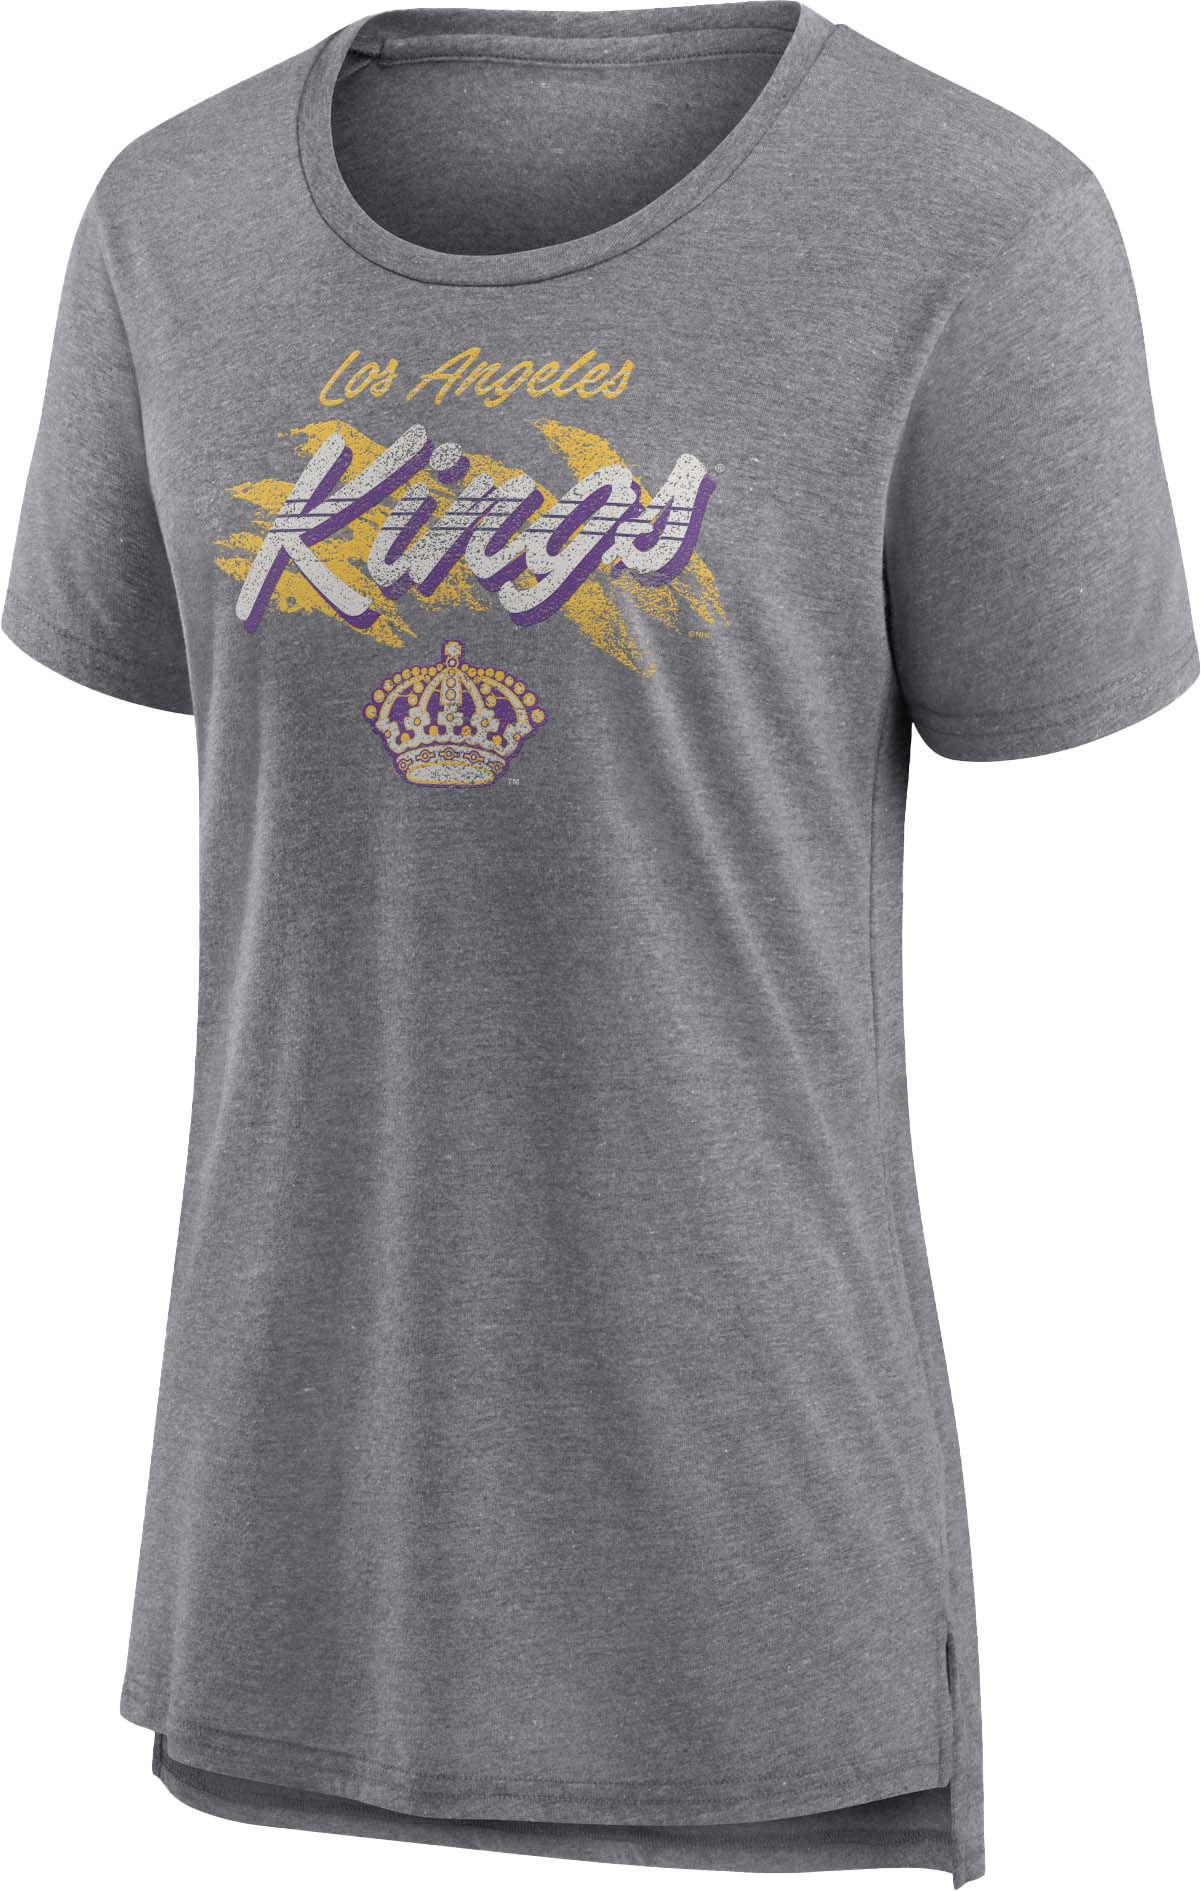 NHL Women's Los Angeles Kings Vintage Grey Tri-Blend T-Shirt